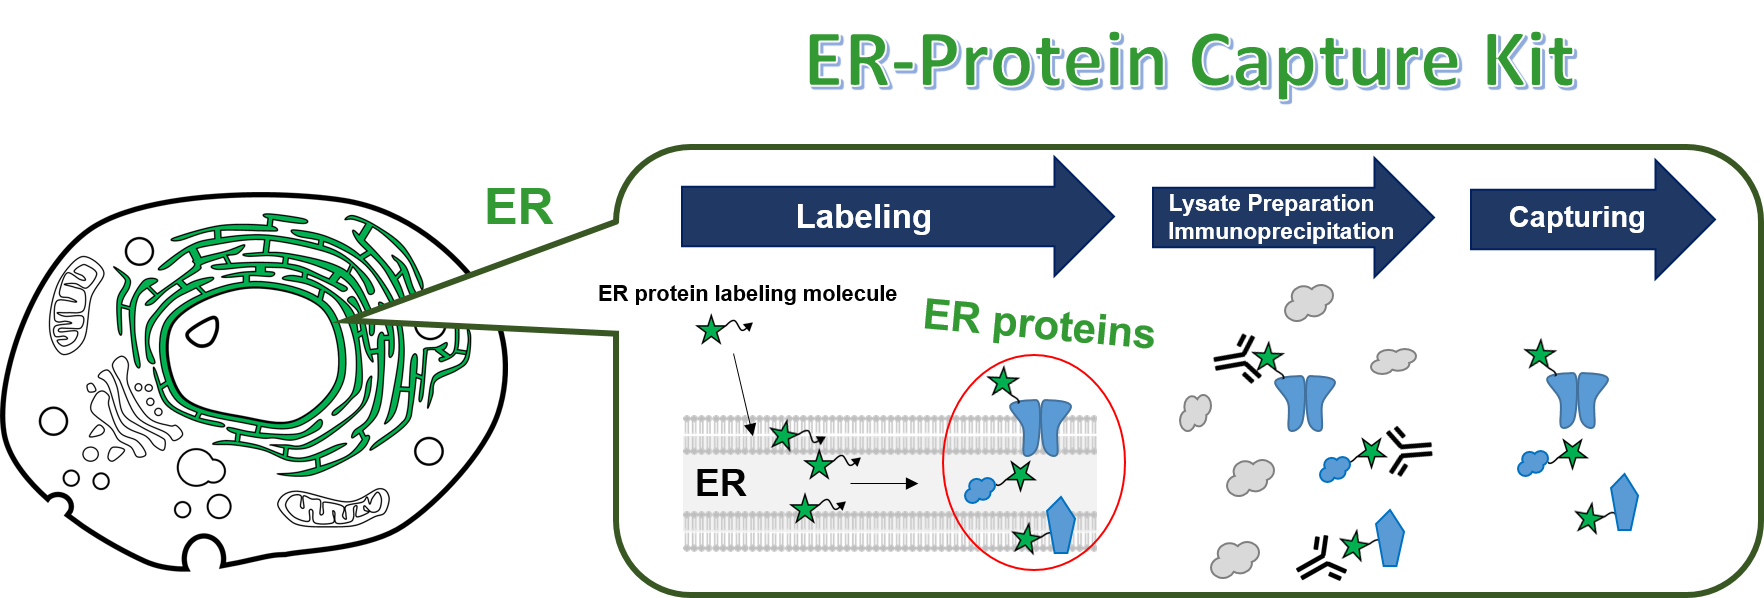 ER-Protein Capture Kit model